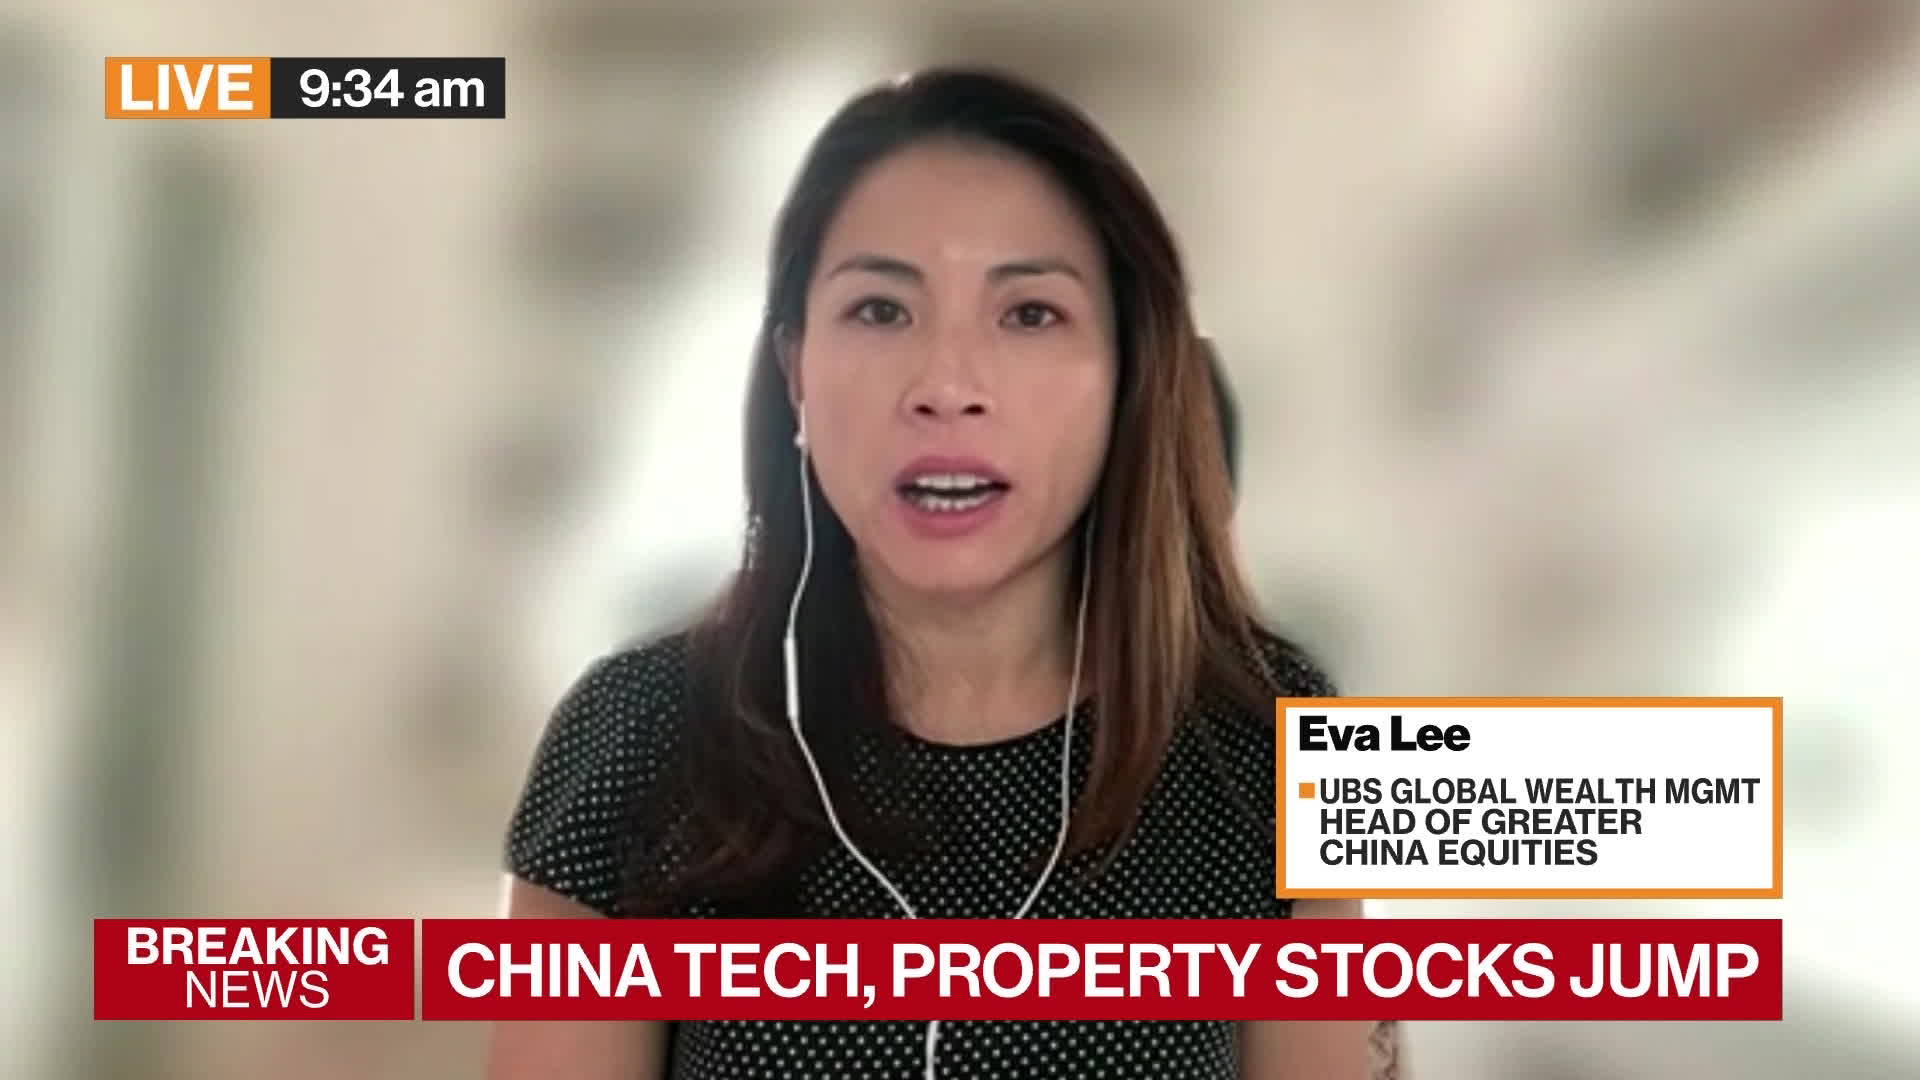 Watch UBS Global WM Eva Lee on Chinese Market Outlook - Bloomberg